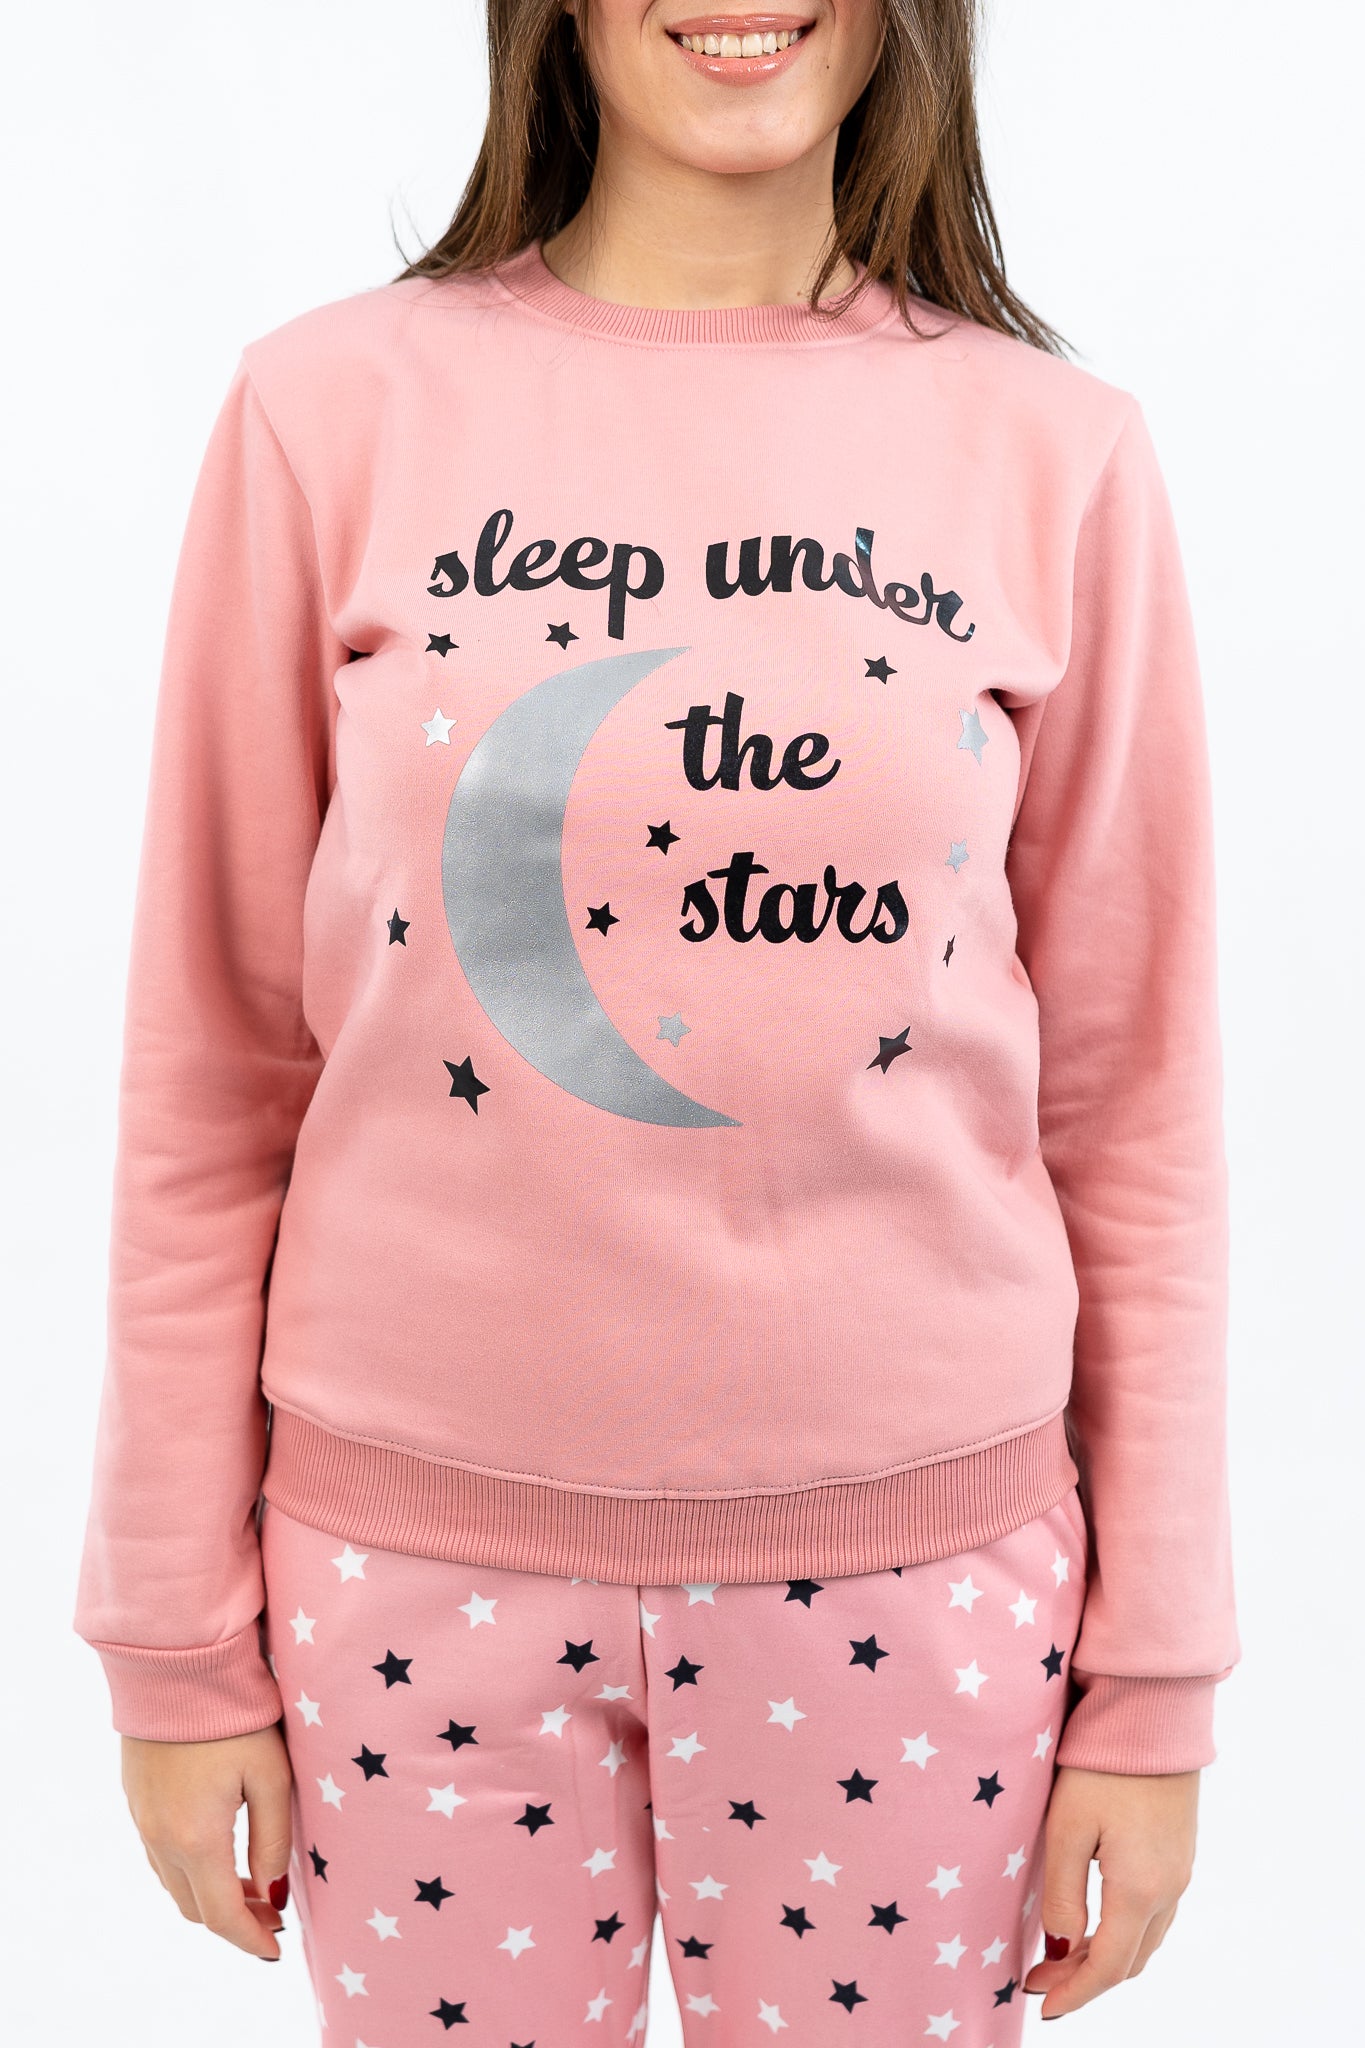 Girl's Kashmir winter pajamas with 'sleep under the stars' print